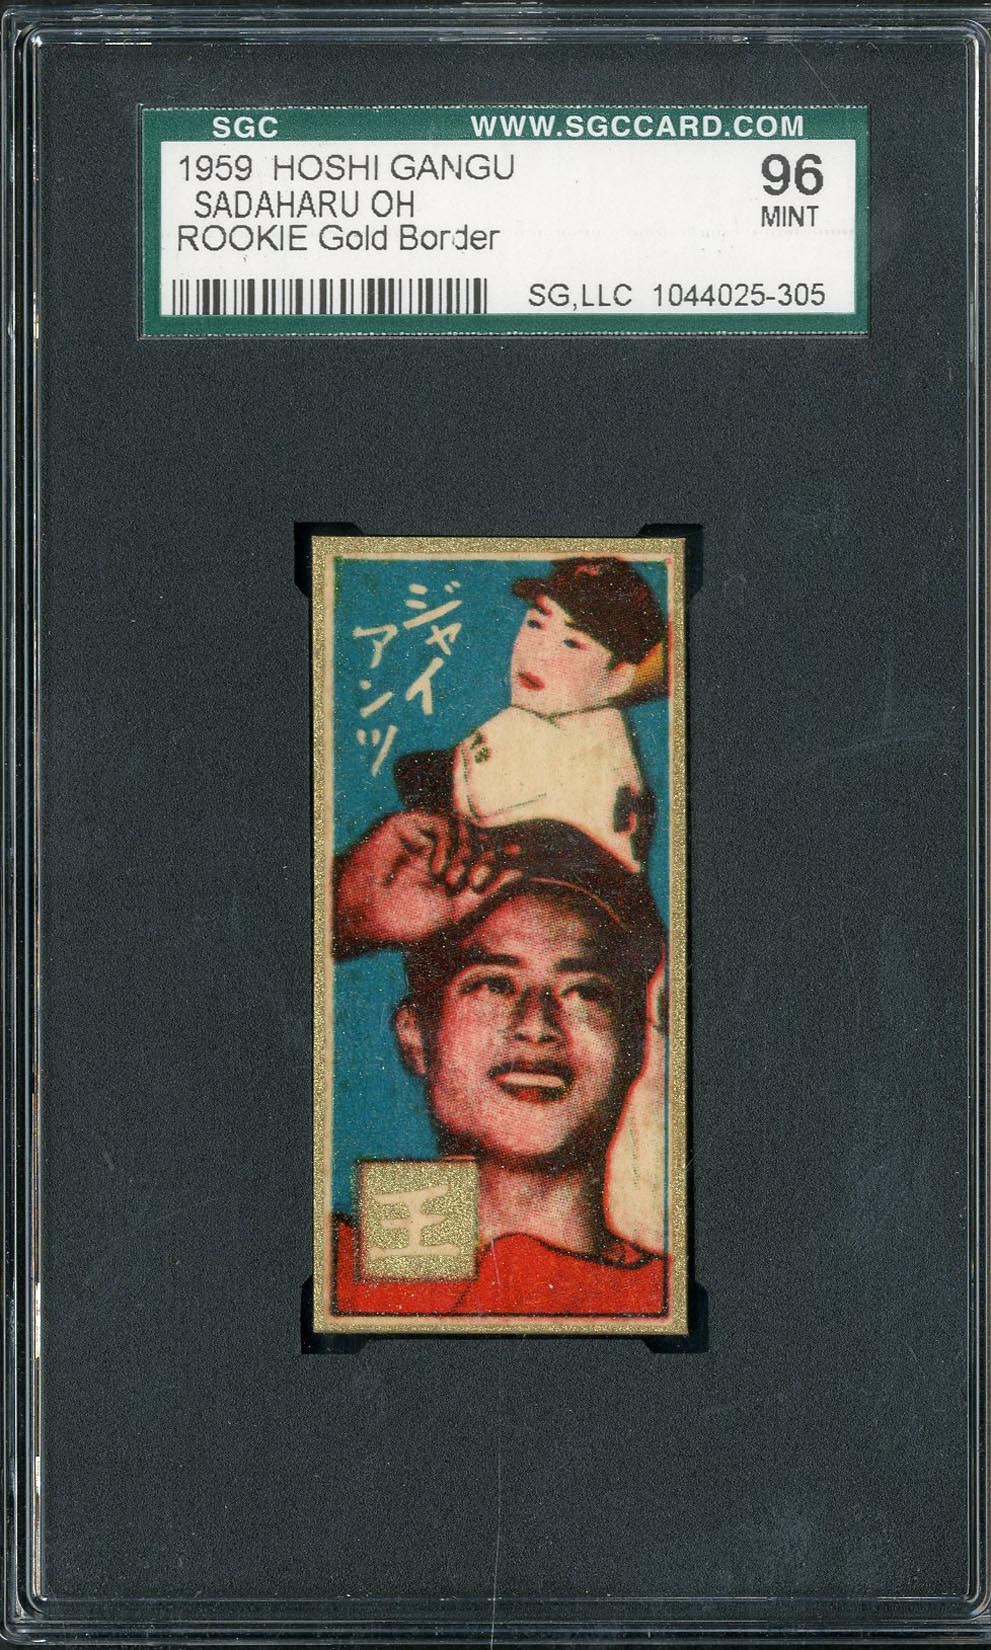 Baseball and Trading Cards - 1959 Hoshi Gangu Gold Border Sadaharu Oh Rookie SGC MINT 96 (Highest Graded)